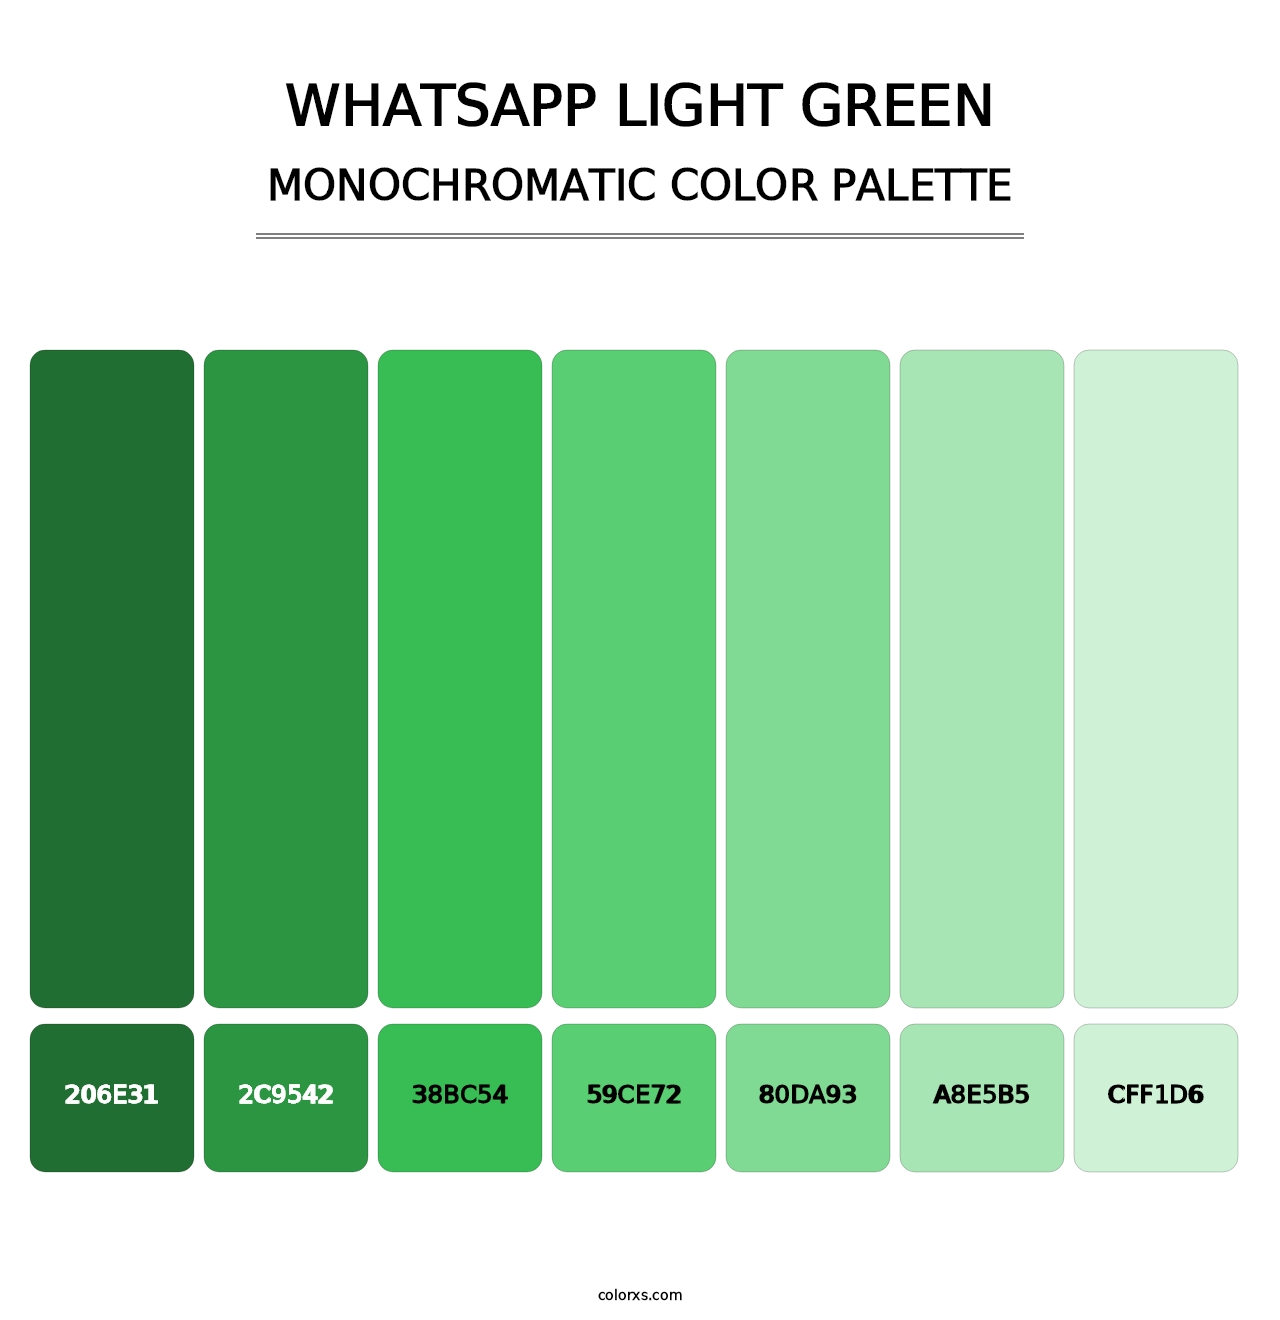 WhatsApp Light Green - Monochromatic Color Palette